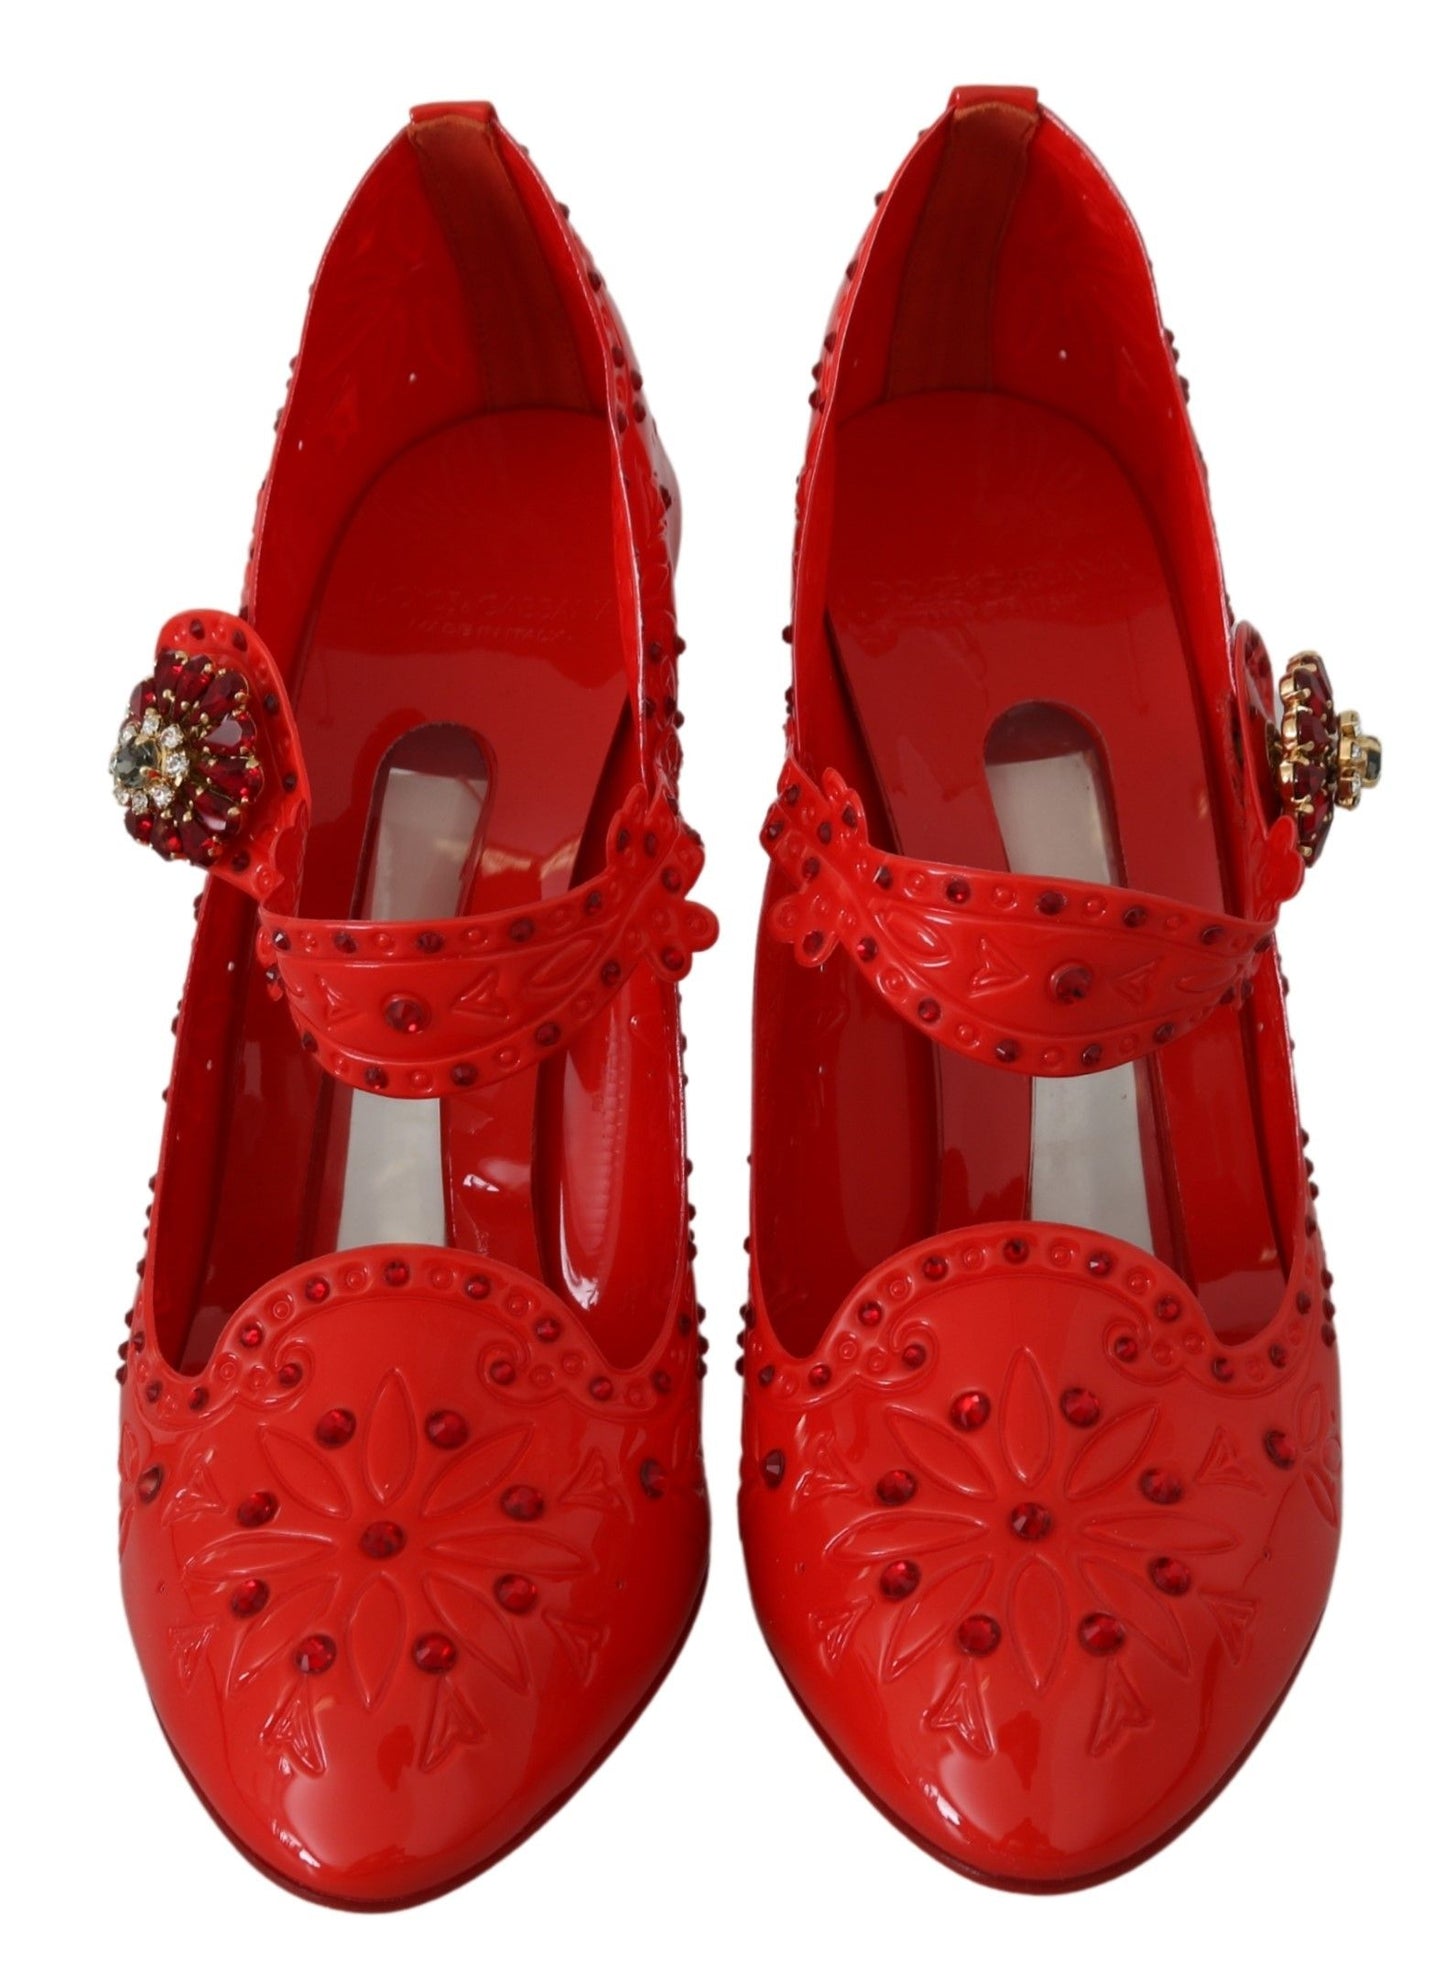 Dolce & Gabbana Red Floral Crystal CINDERELLA Heels Shoes